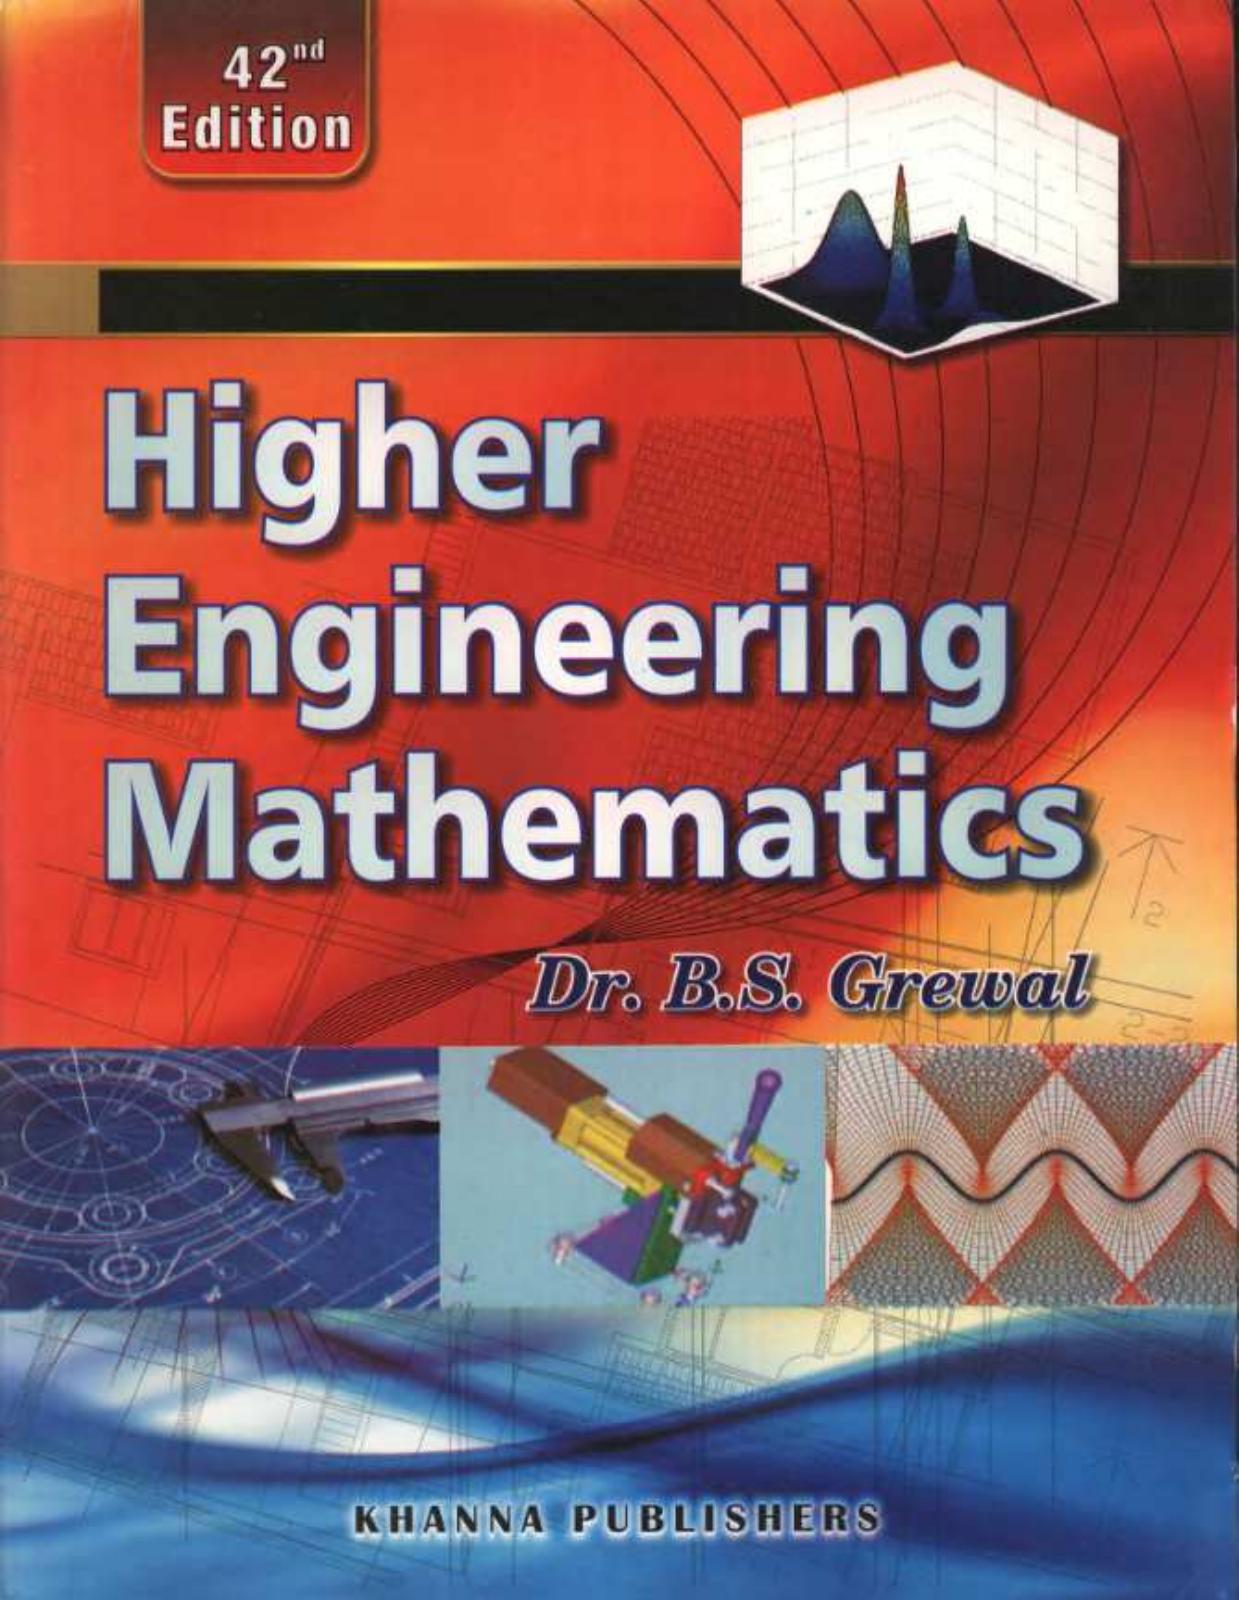 Higher Engineering Mathematics 42nd Edition